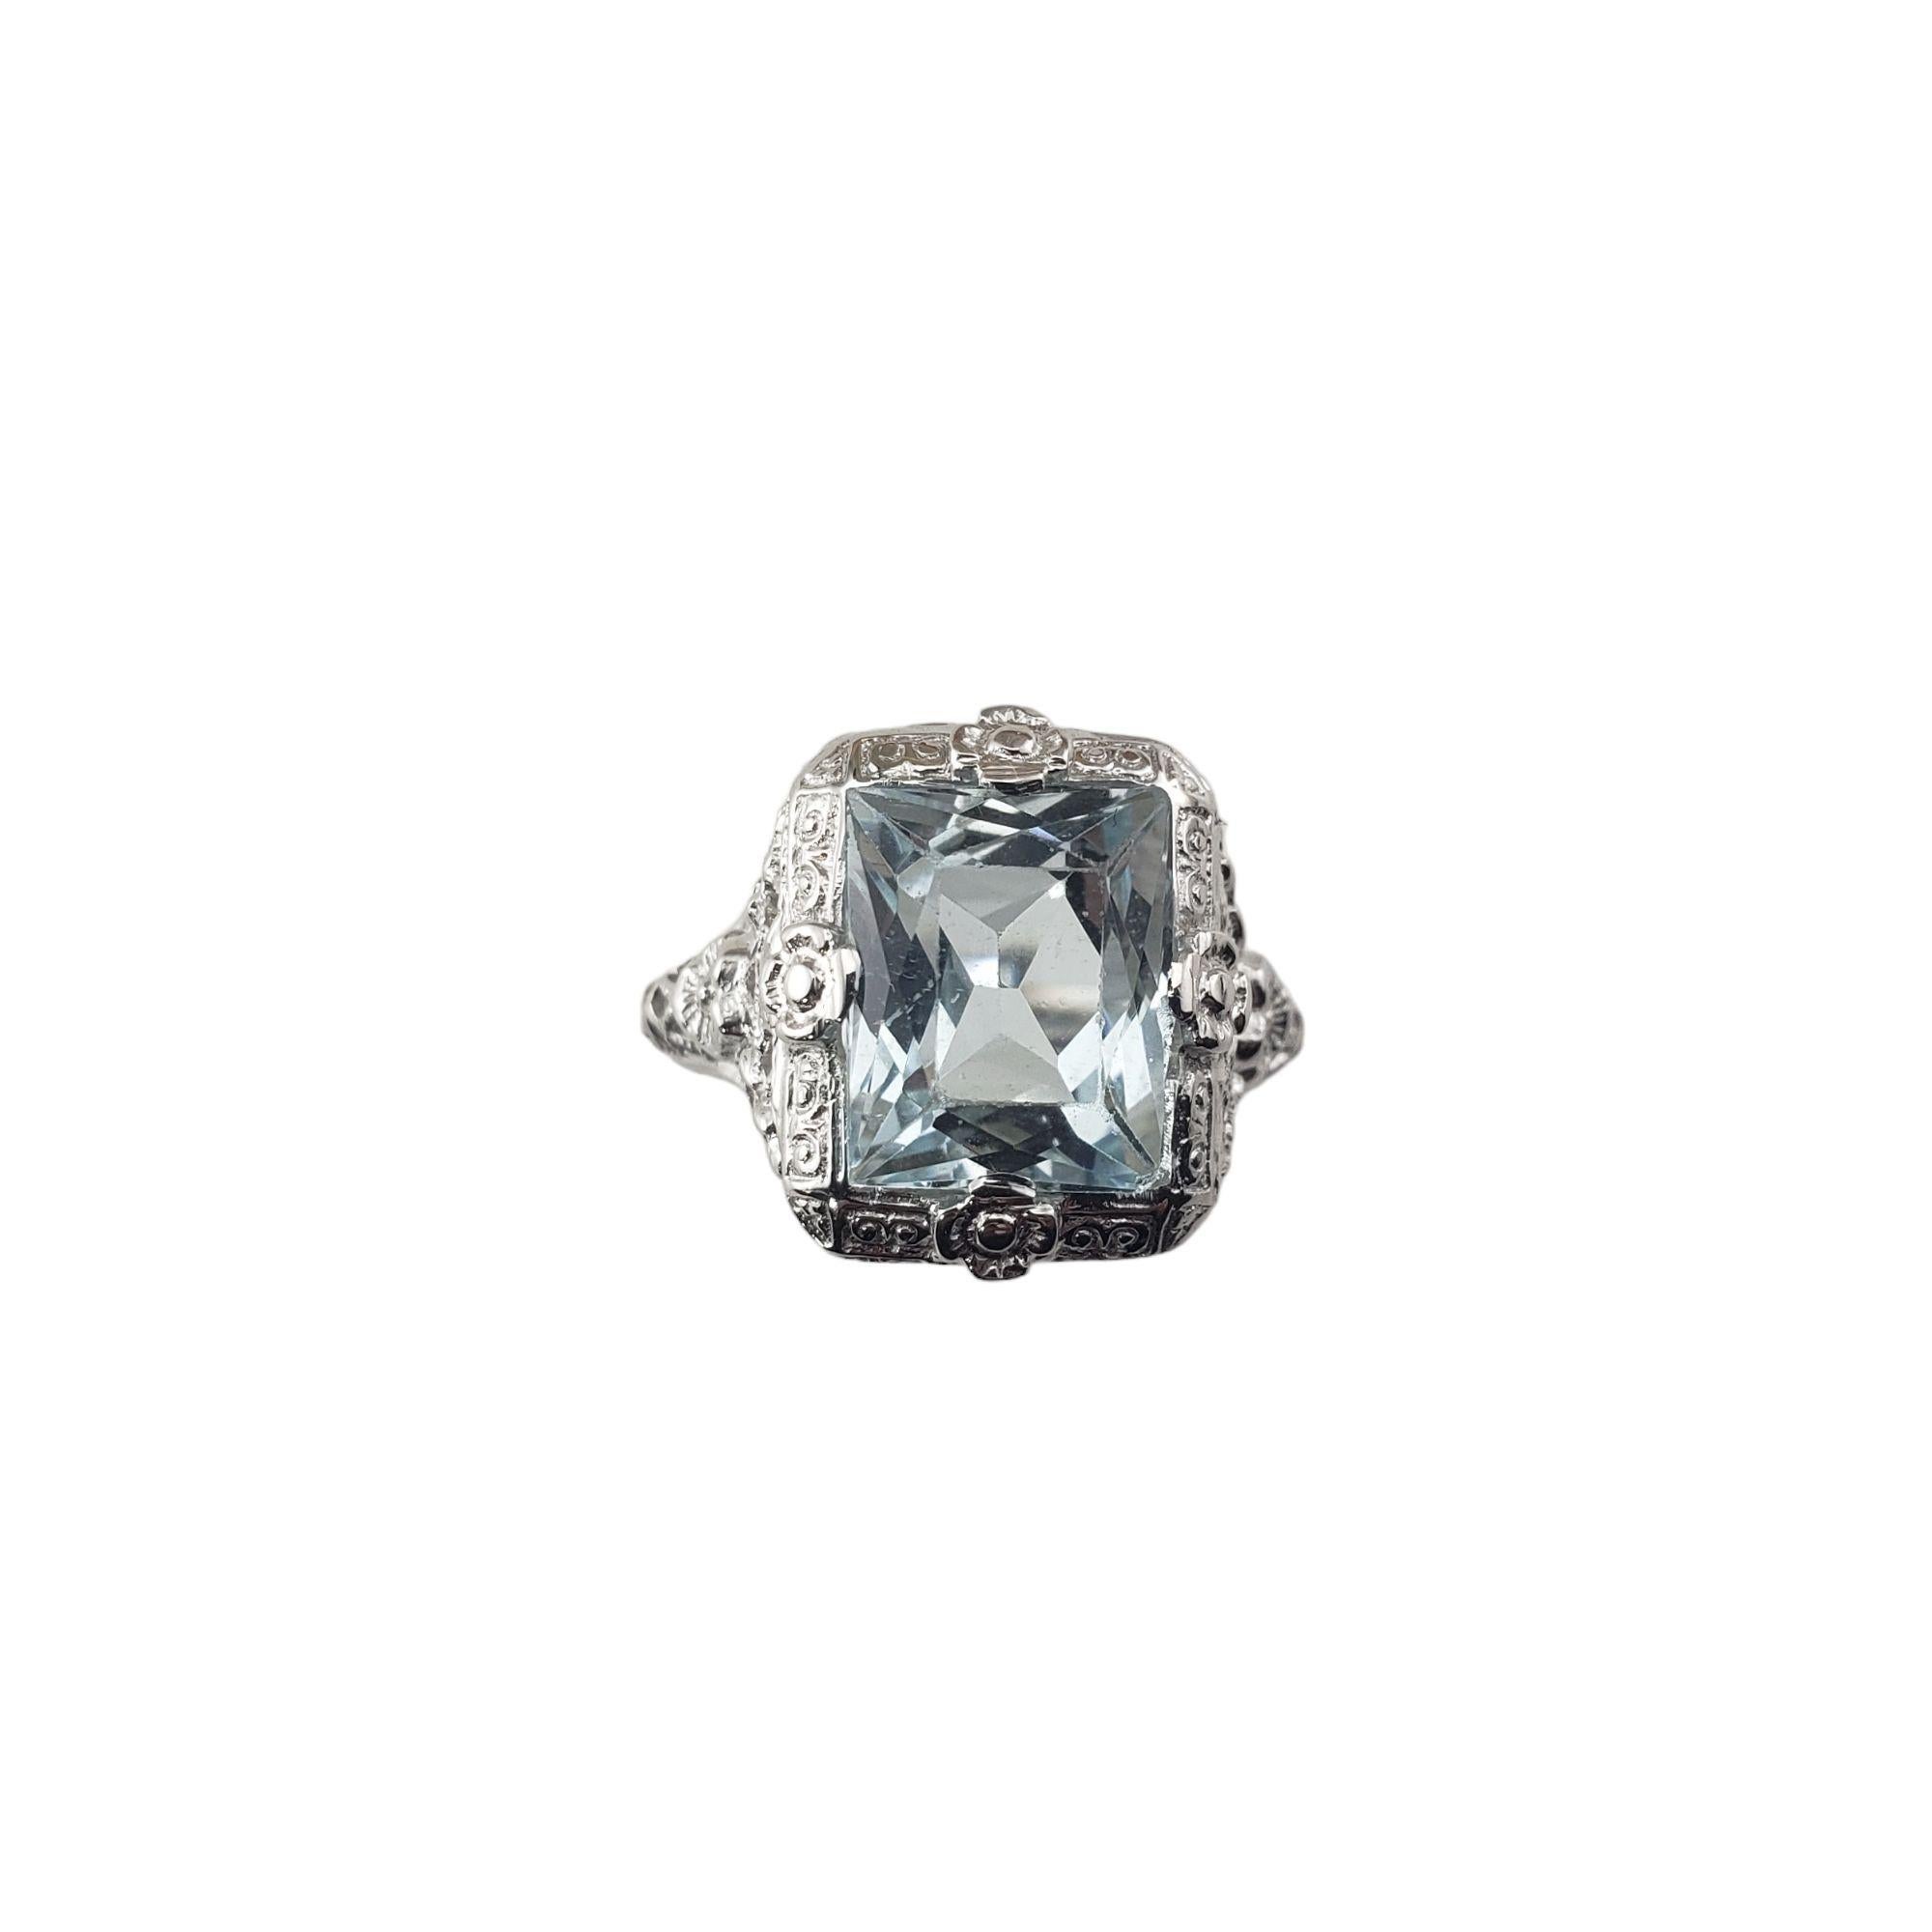  18 Karat White Gold Aquamarine Ring Size 7 JAGi Certified-

This stunning ring features one emerald cut aquamarine gemstone set in beautifully detailed 14K white gold. Width: 15 mm.
Shank: 2 mm.

Aquamarine weight: 3.95 ct.

Ring